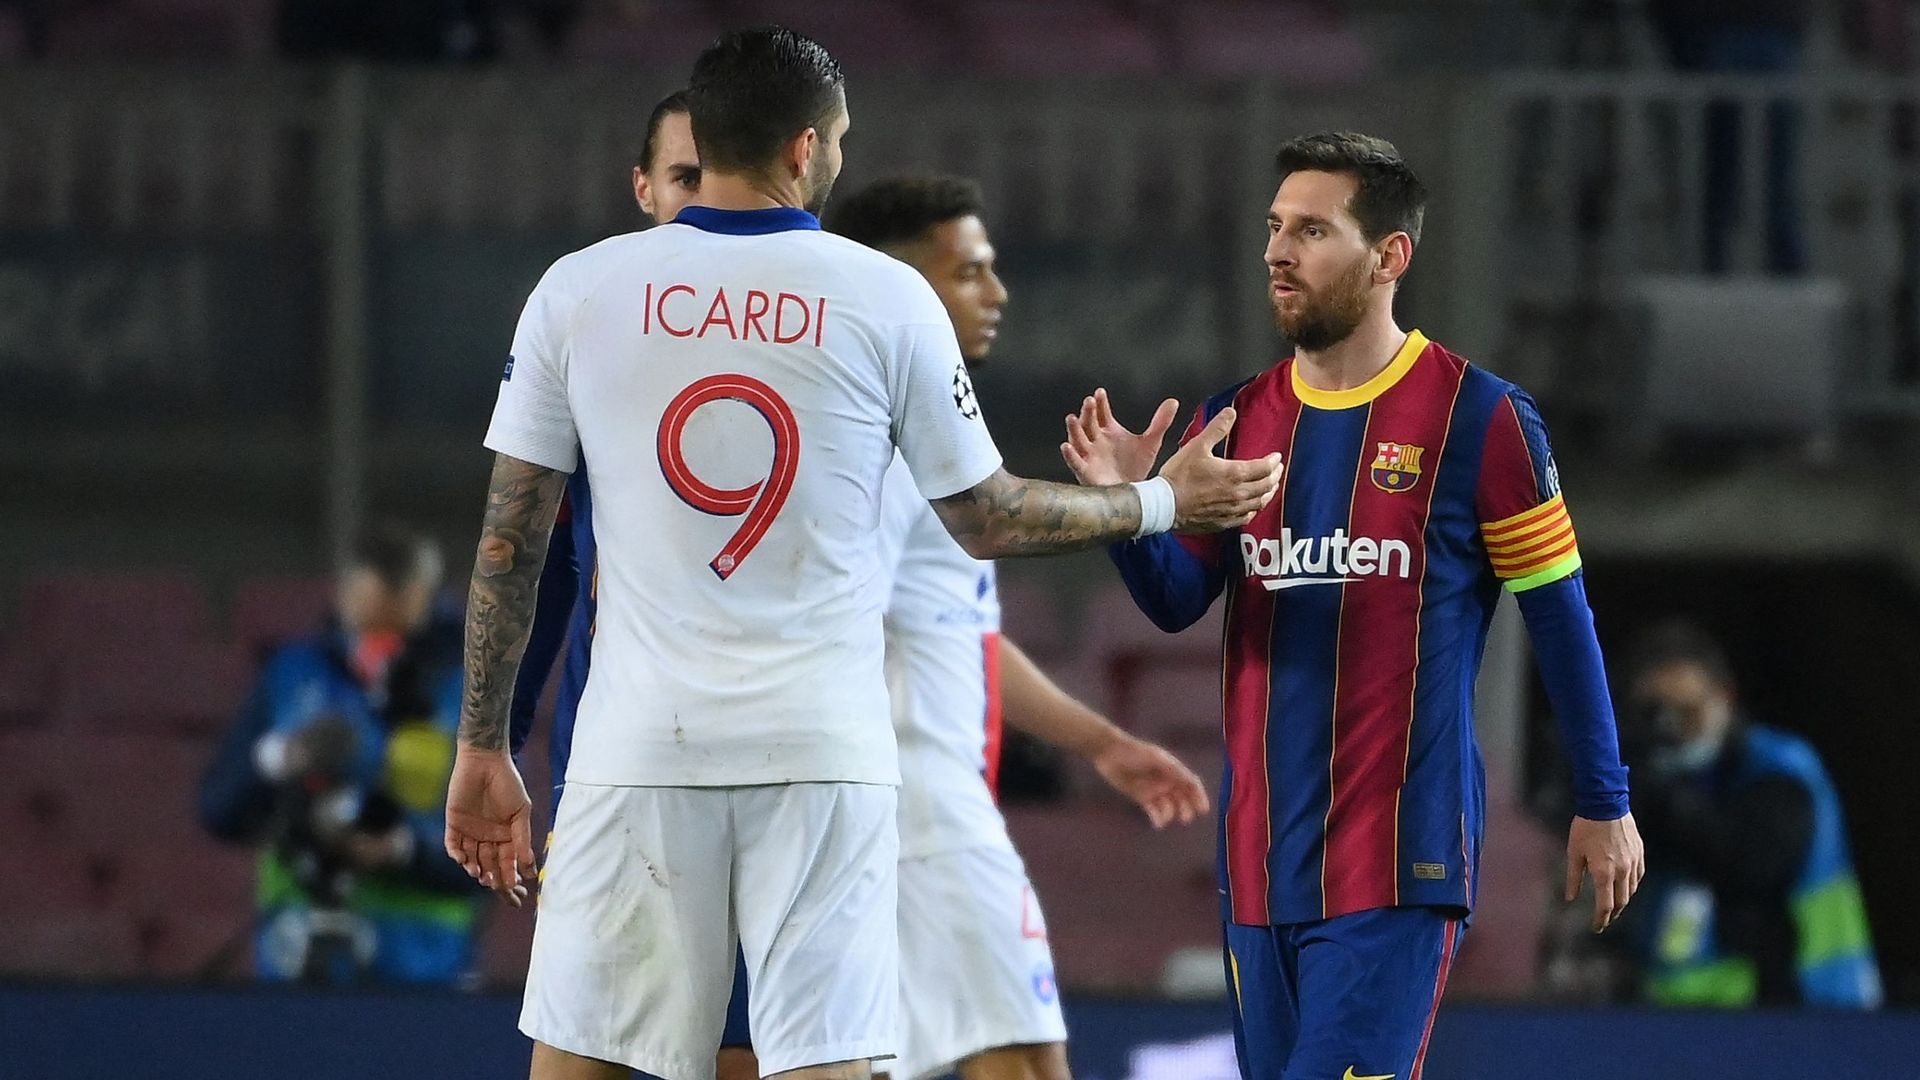 Mauro Icardi et Lionel Messi futurs coéquipiers au PSG ? 